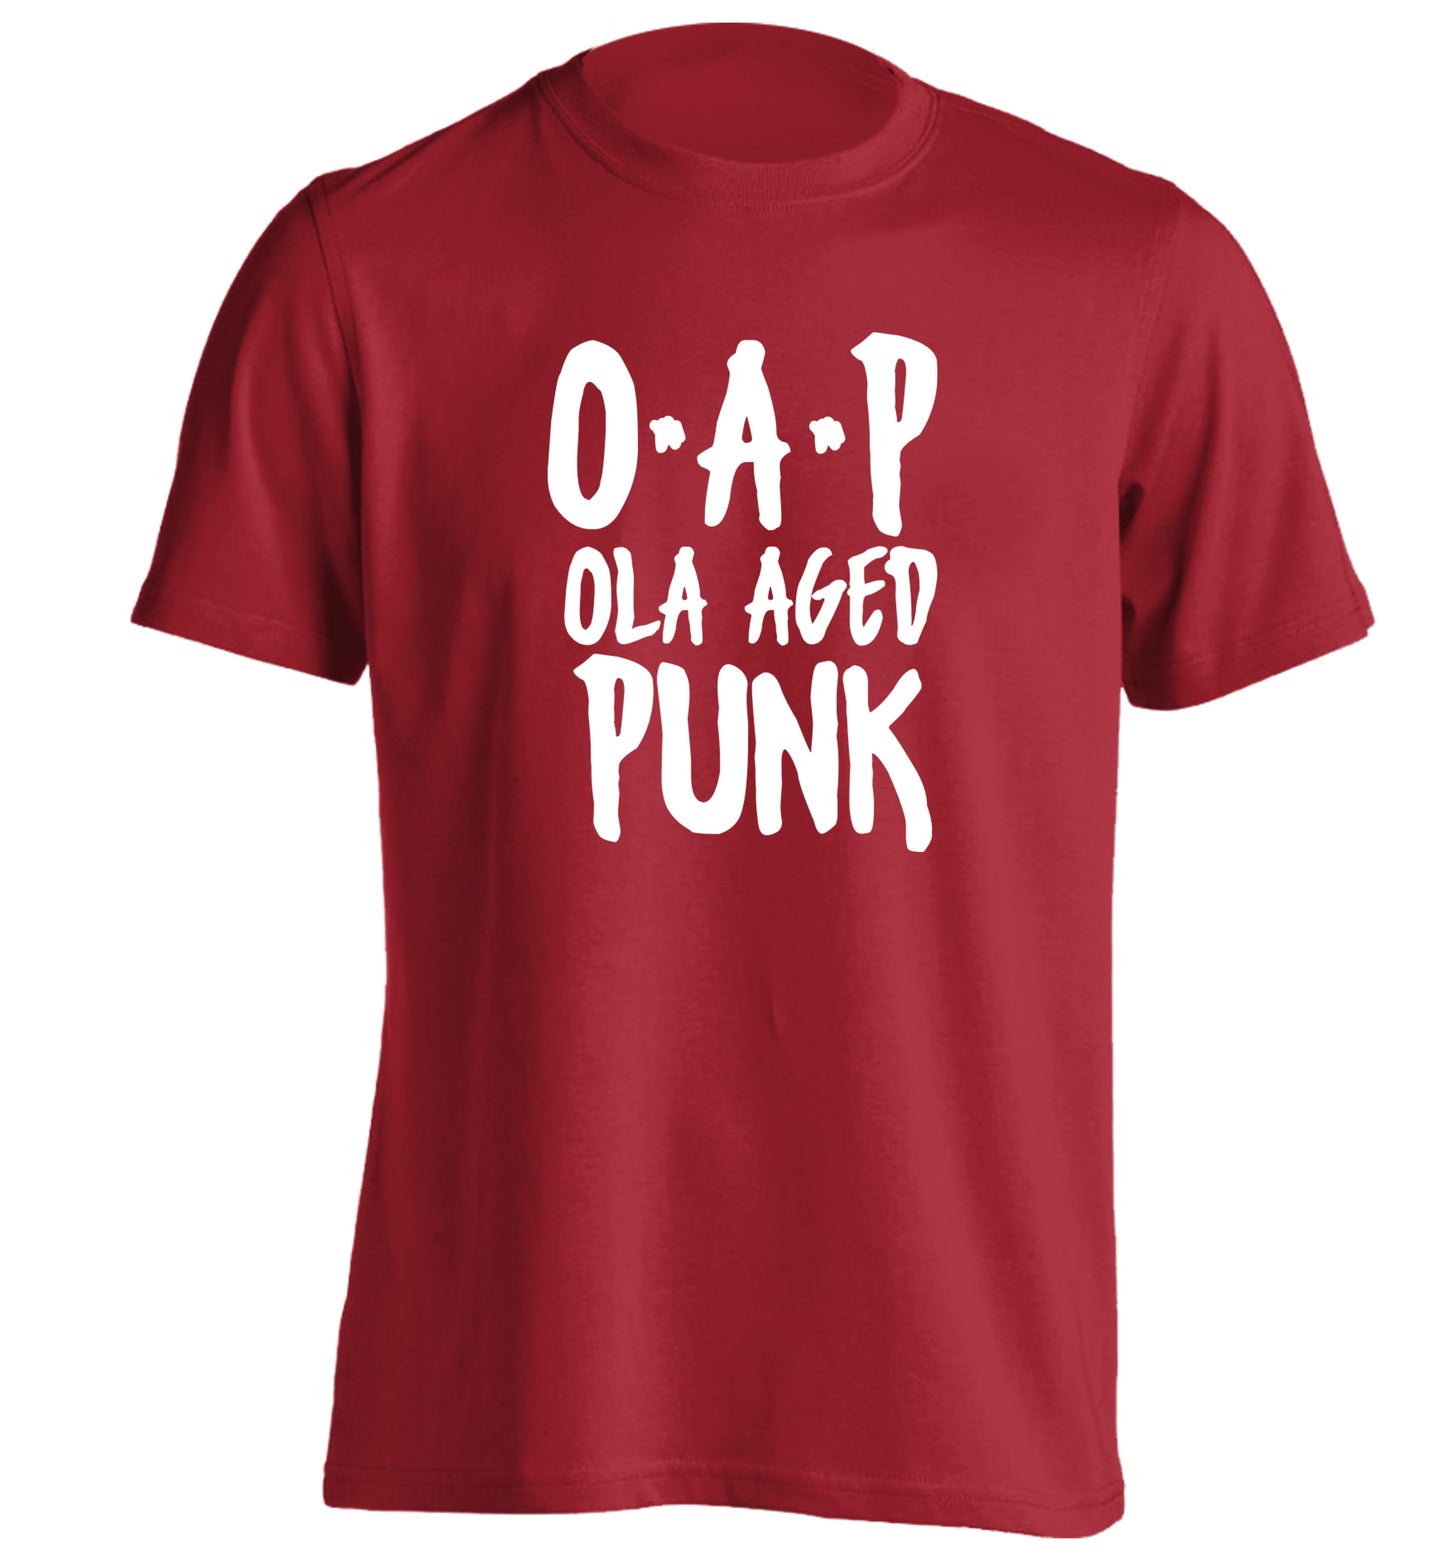 O.A.P Old Aged Punk adults unisex red Tshirt 2XL